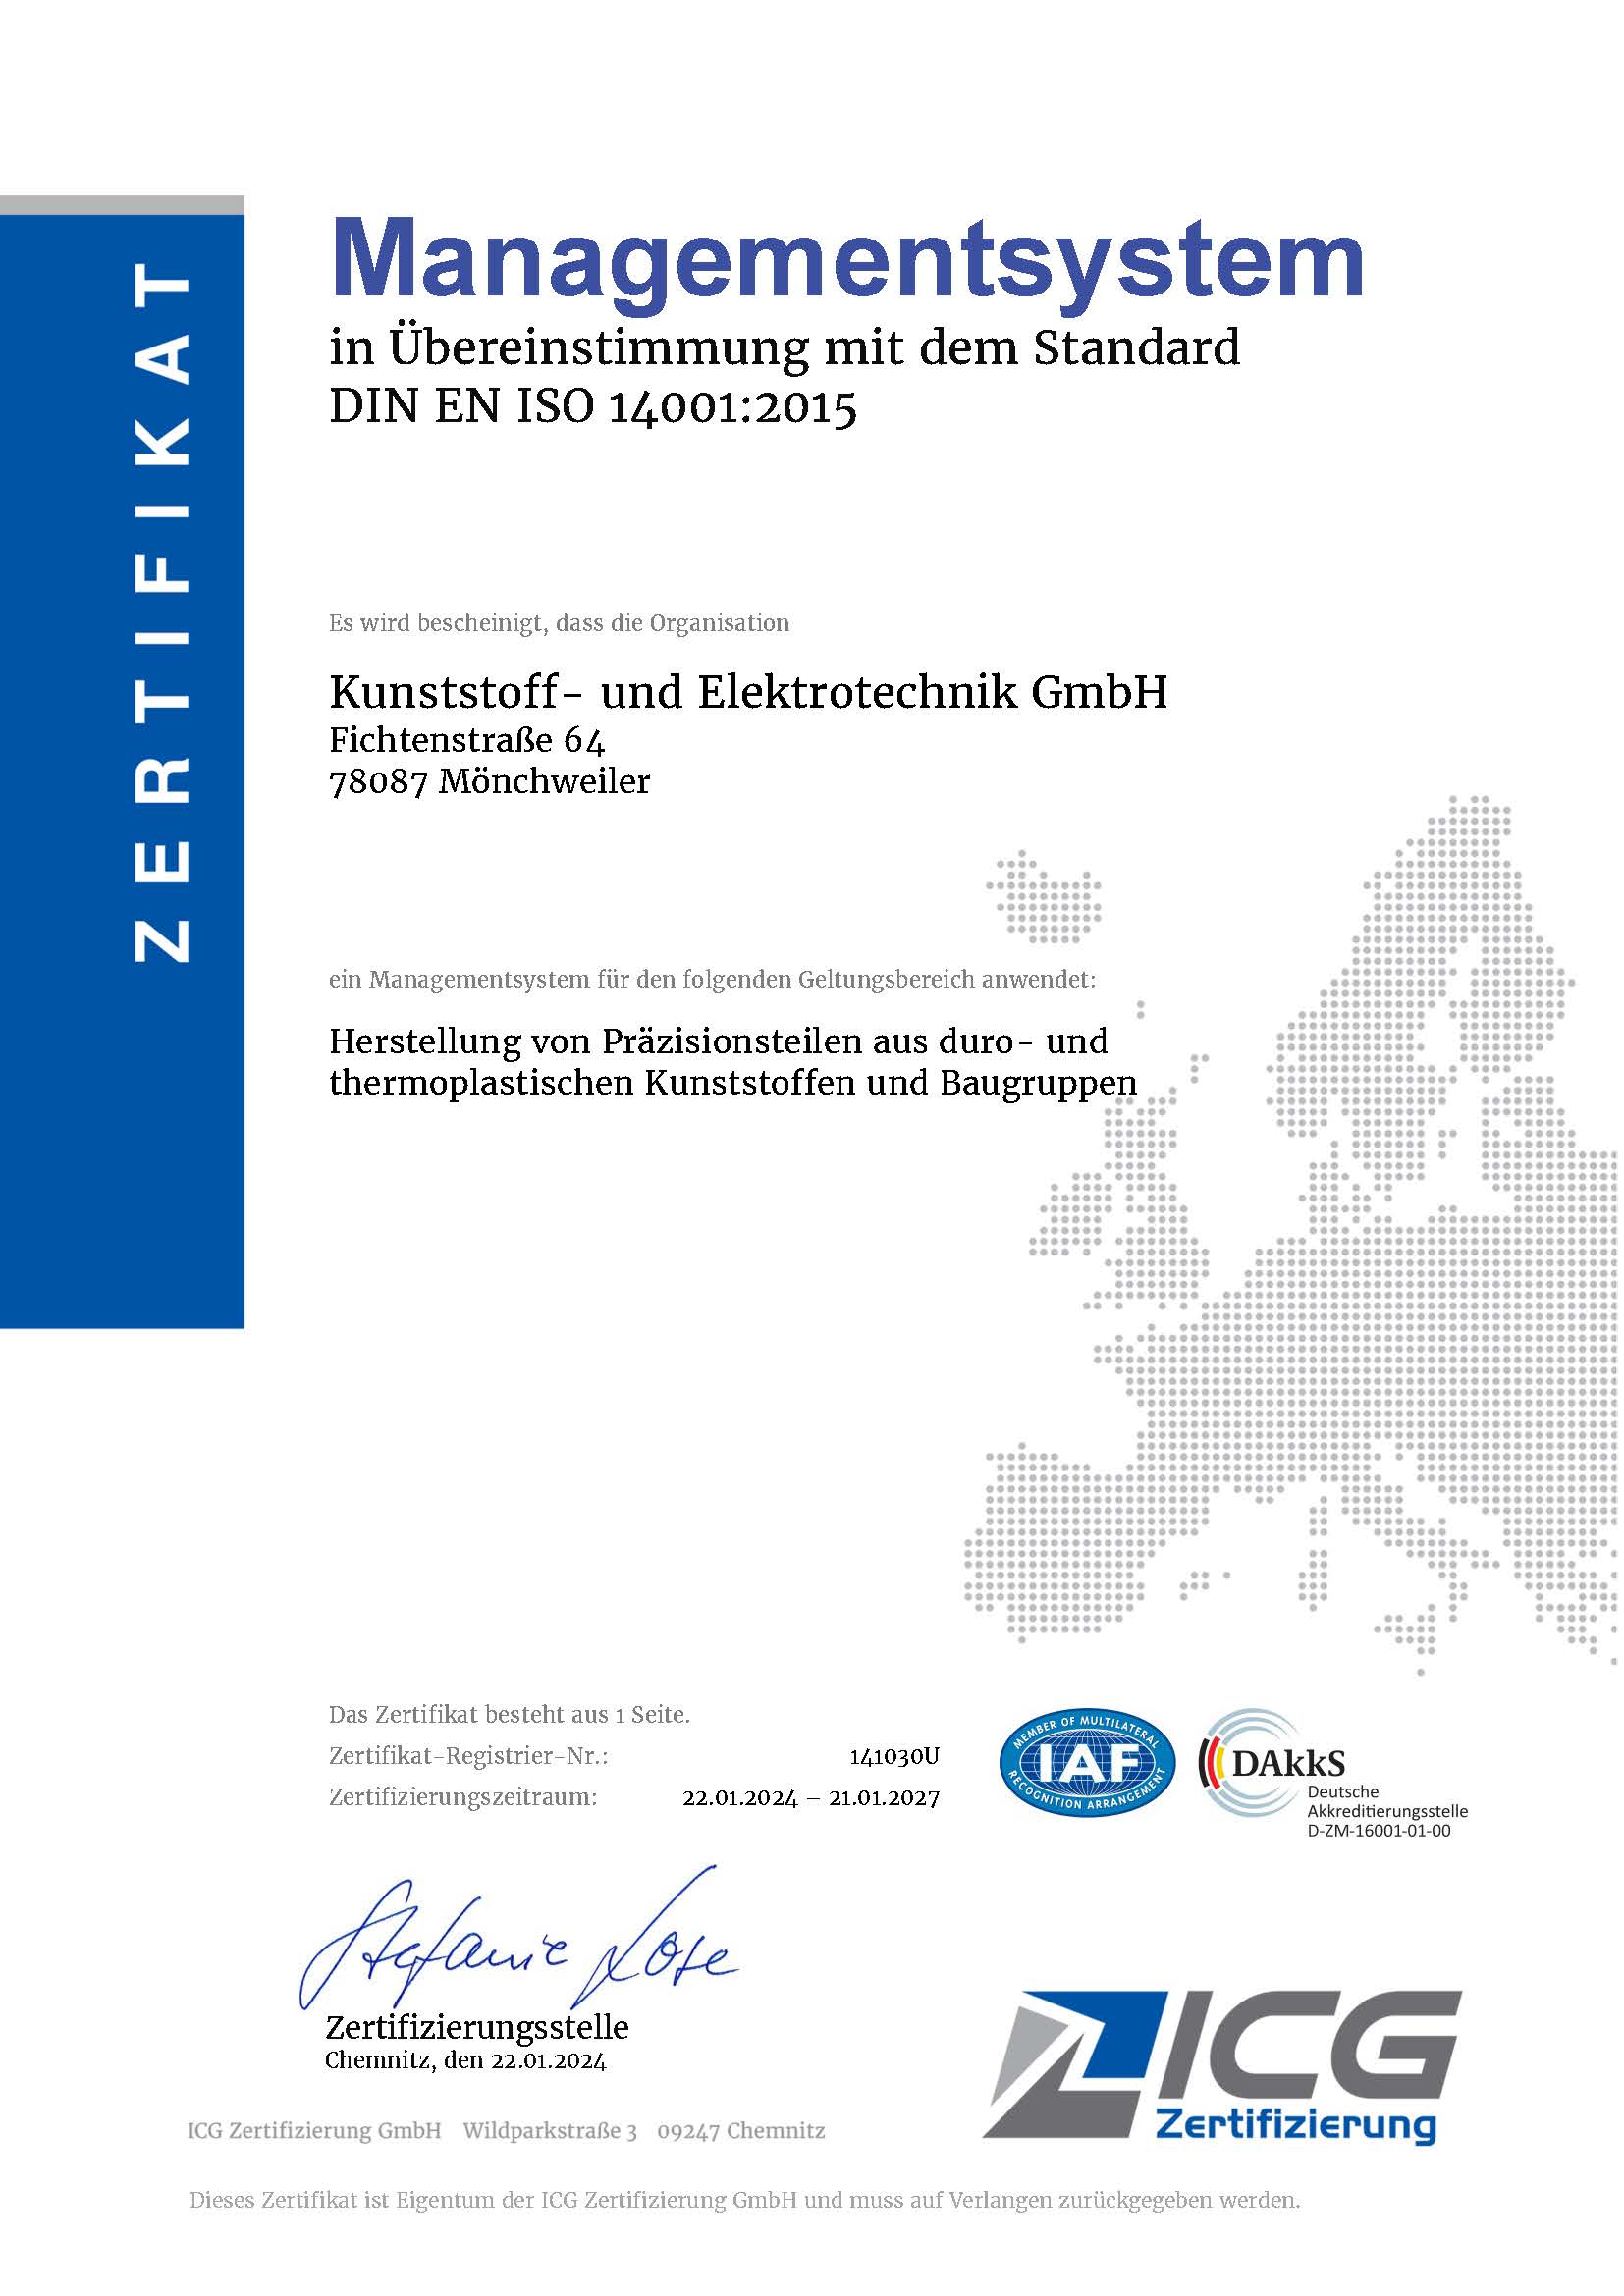 141130U_1__Zertifikat_ISO 14001_22.01.2024